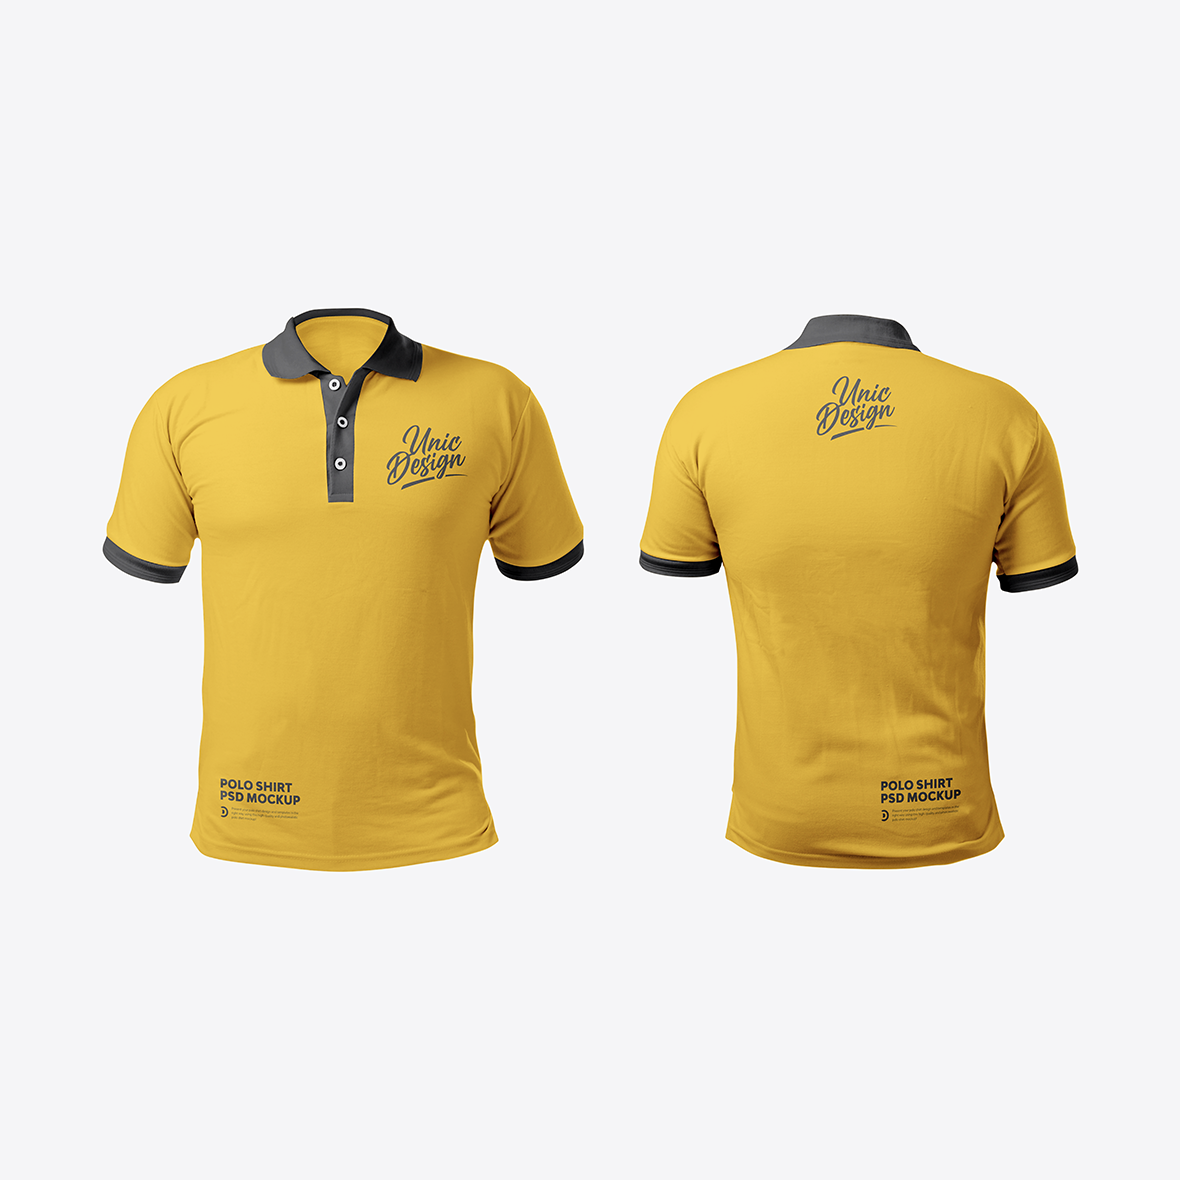 Polo Shirt Mockup – UnicDesign